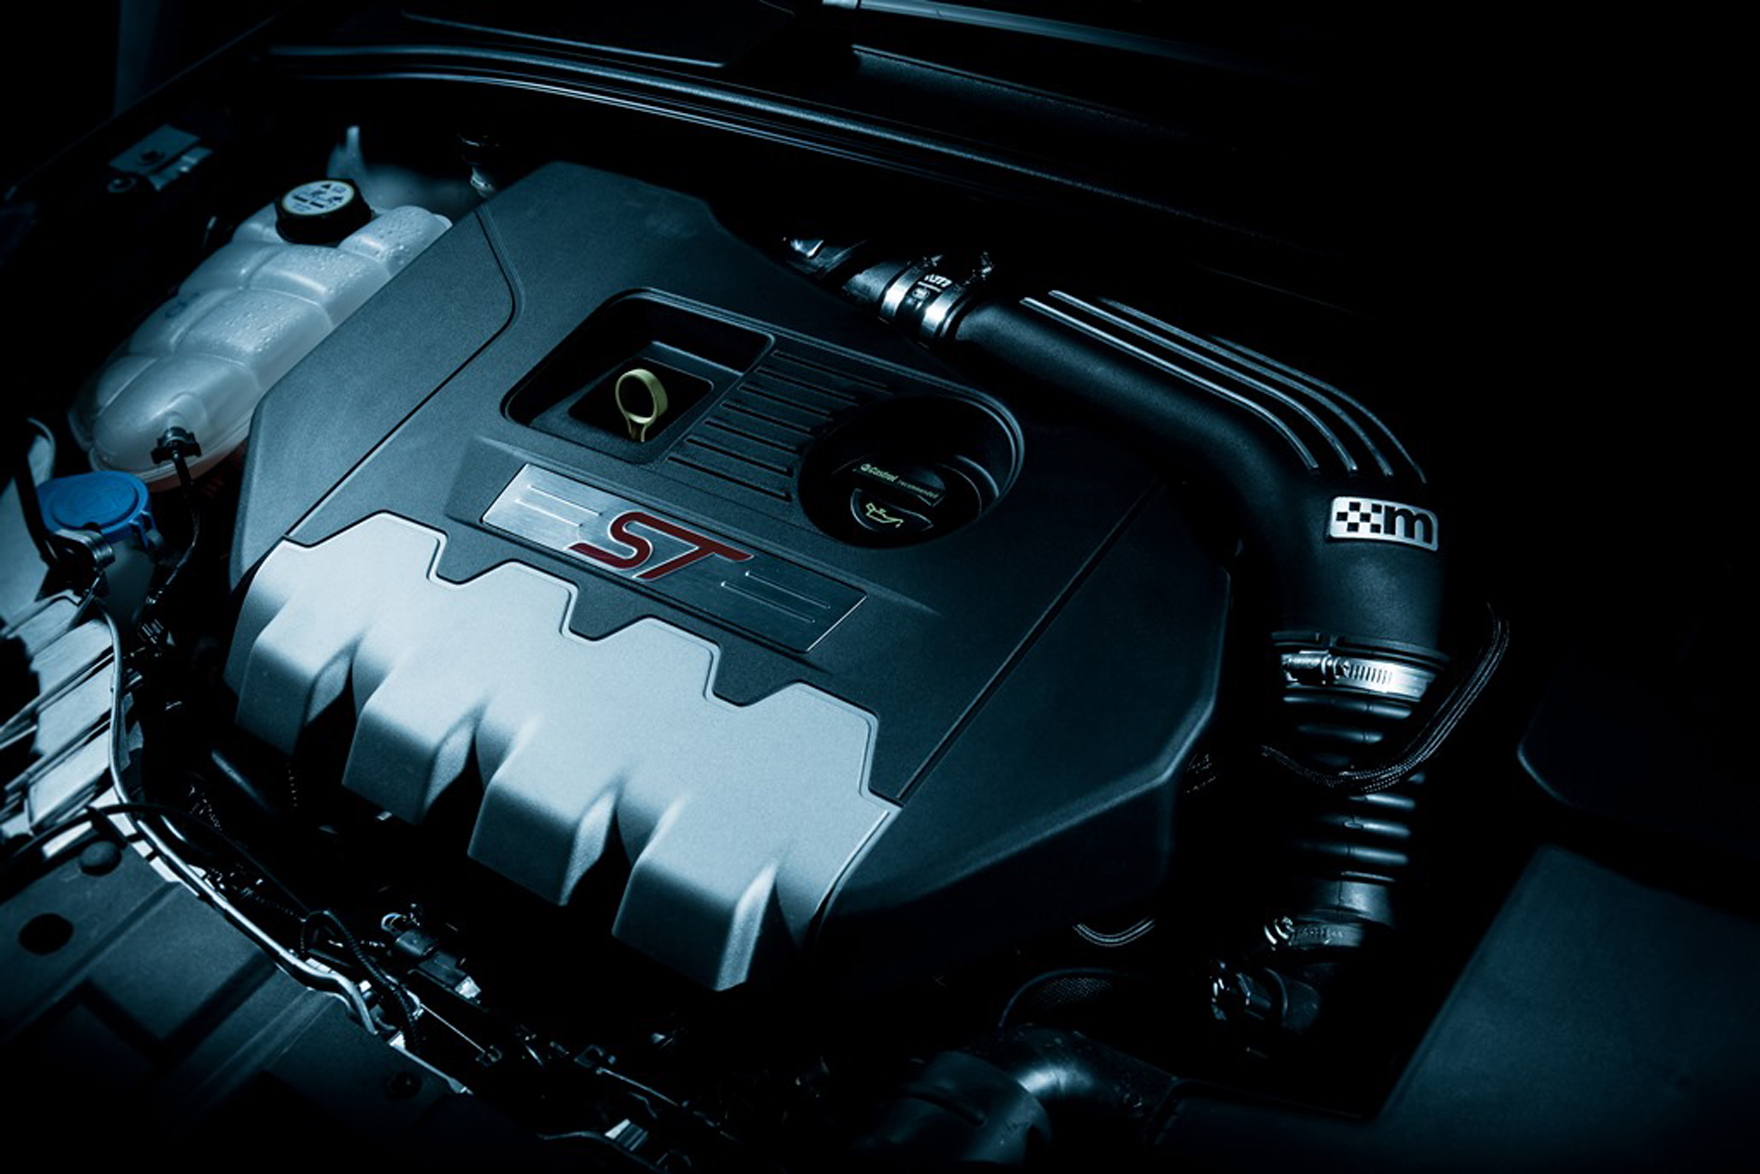 2.0-litre Ford Focus petrol engine